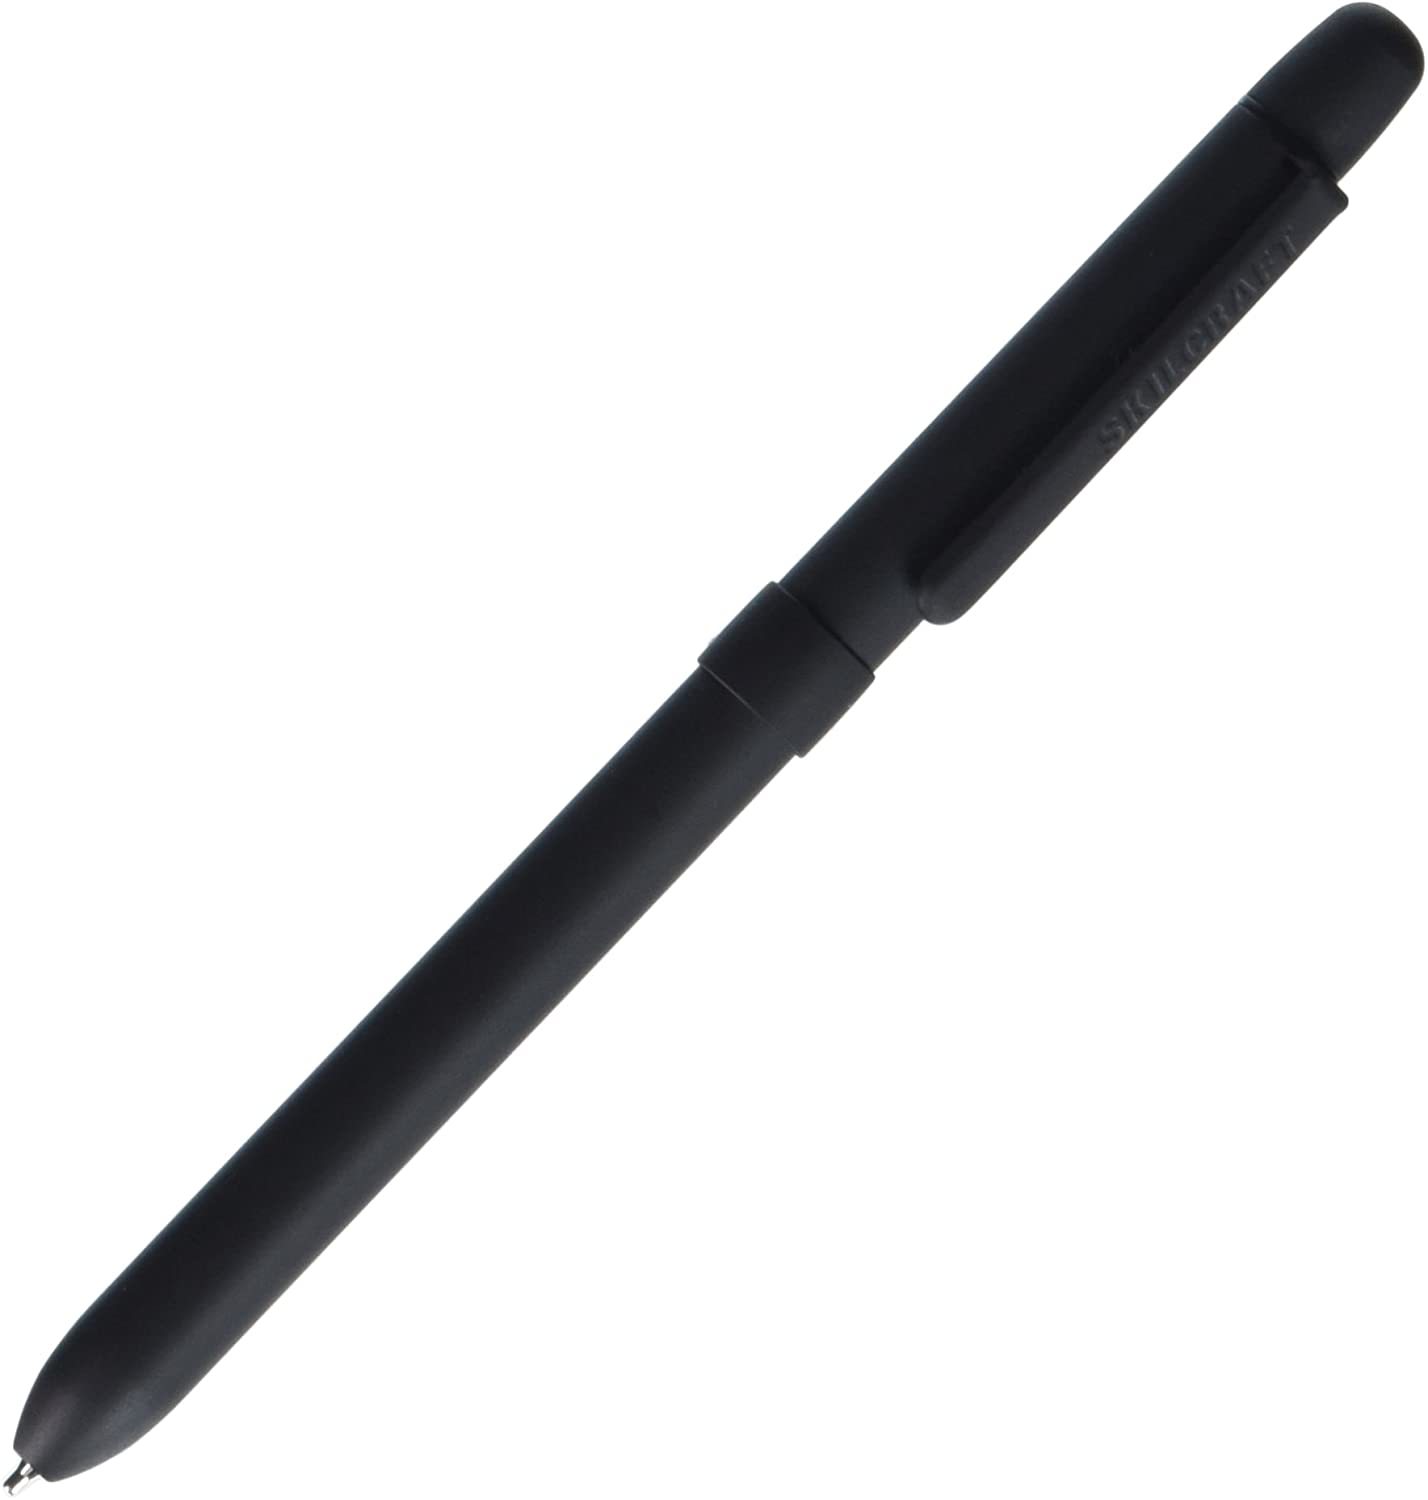 Skilcraft B3 Aviator Multi function Pen - Black